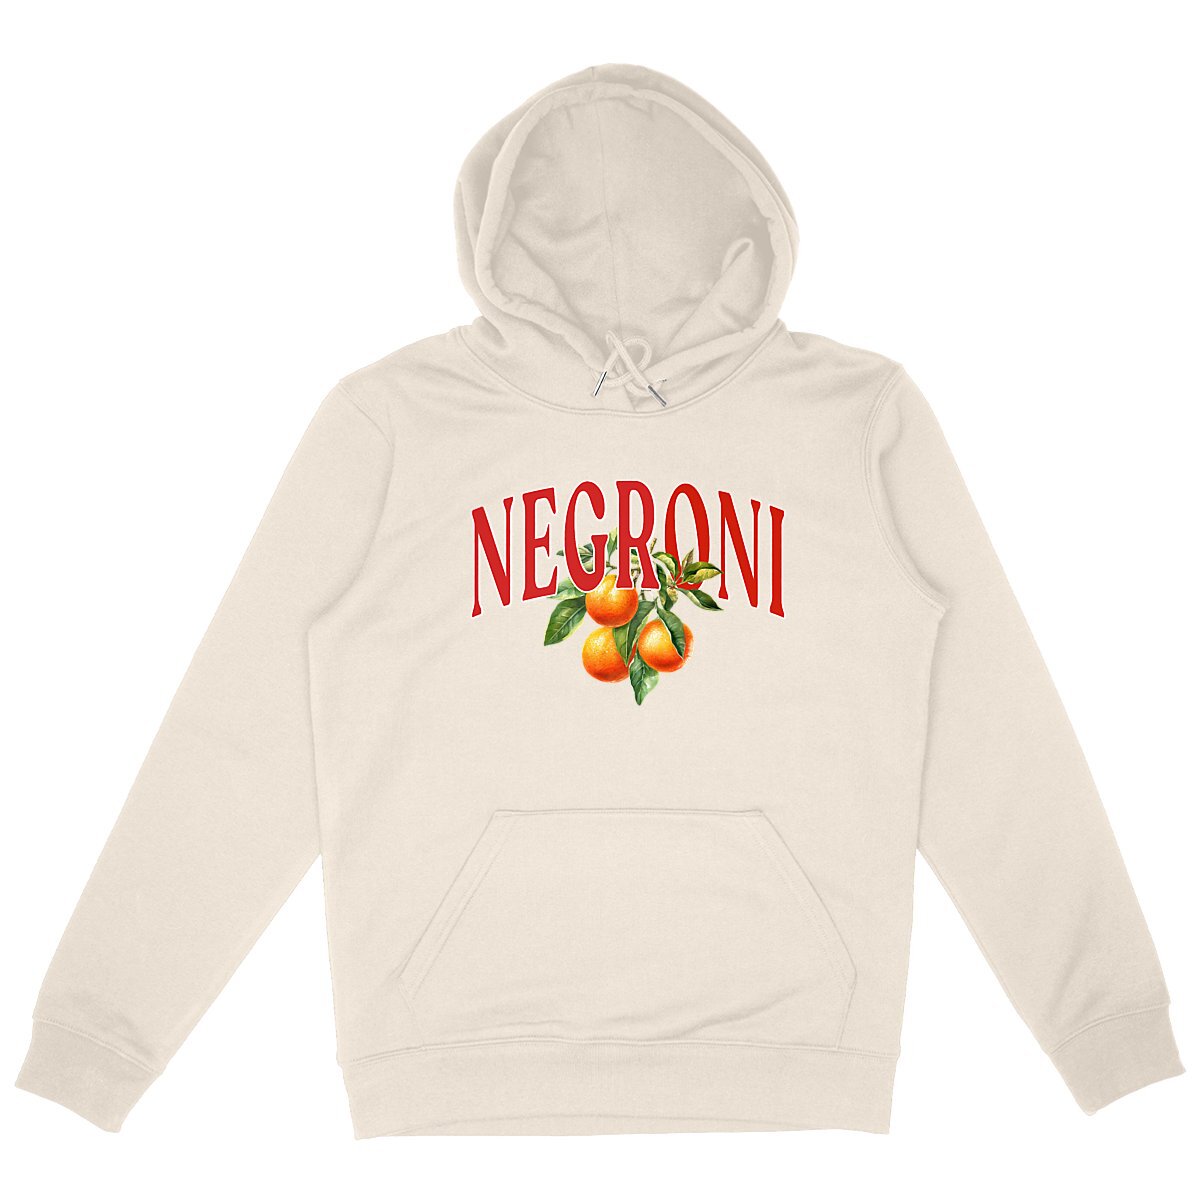 Negroni Life - Organic Hoodie - The Refined Spirit